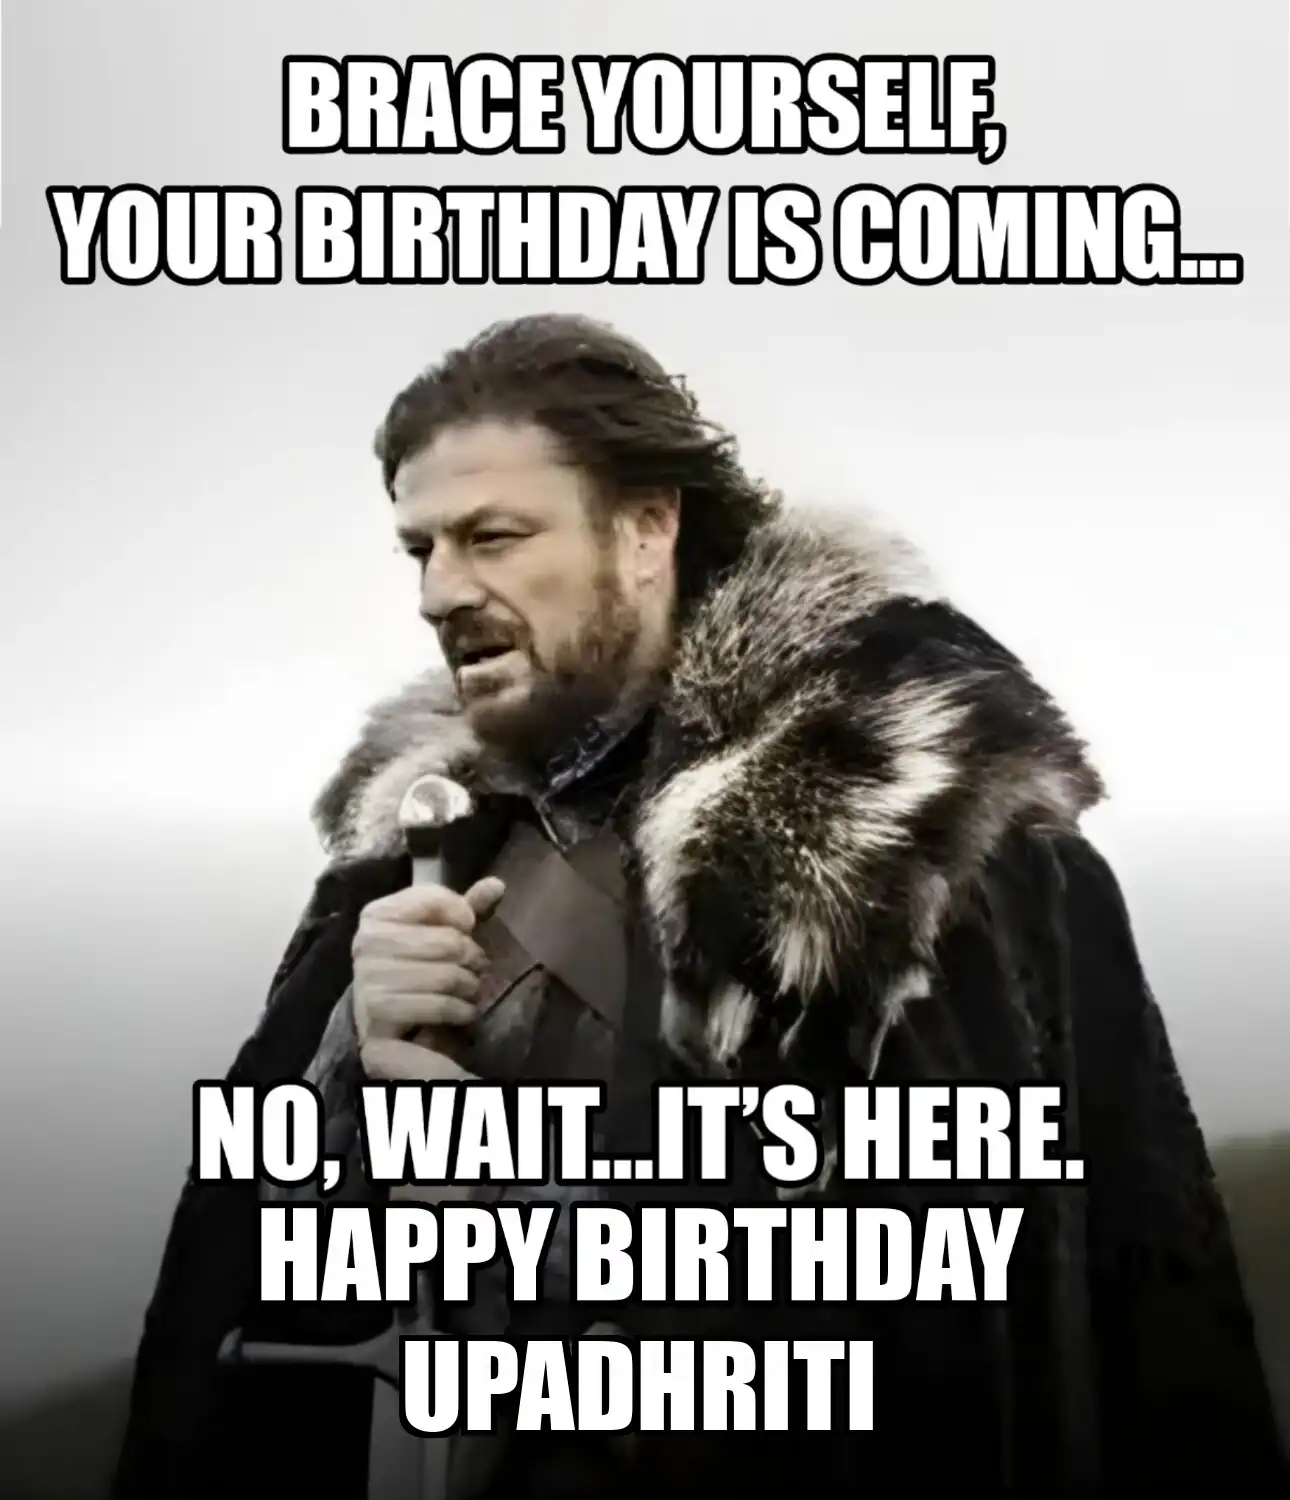 Happy Birthday Upadhriti Brace Yourself Your Birthday Is Coming Meme